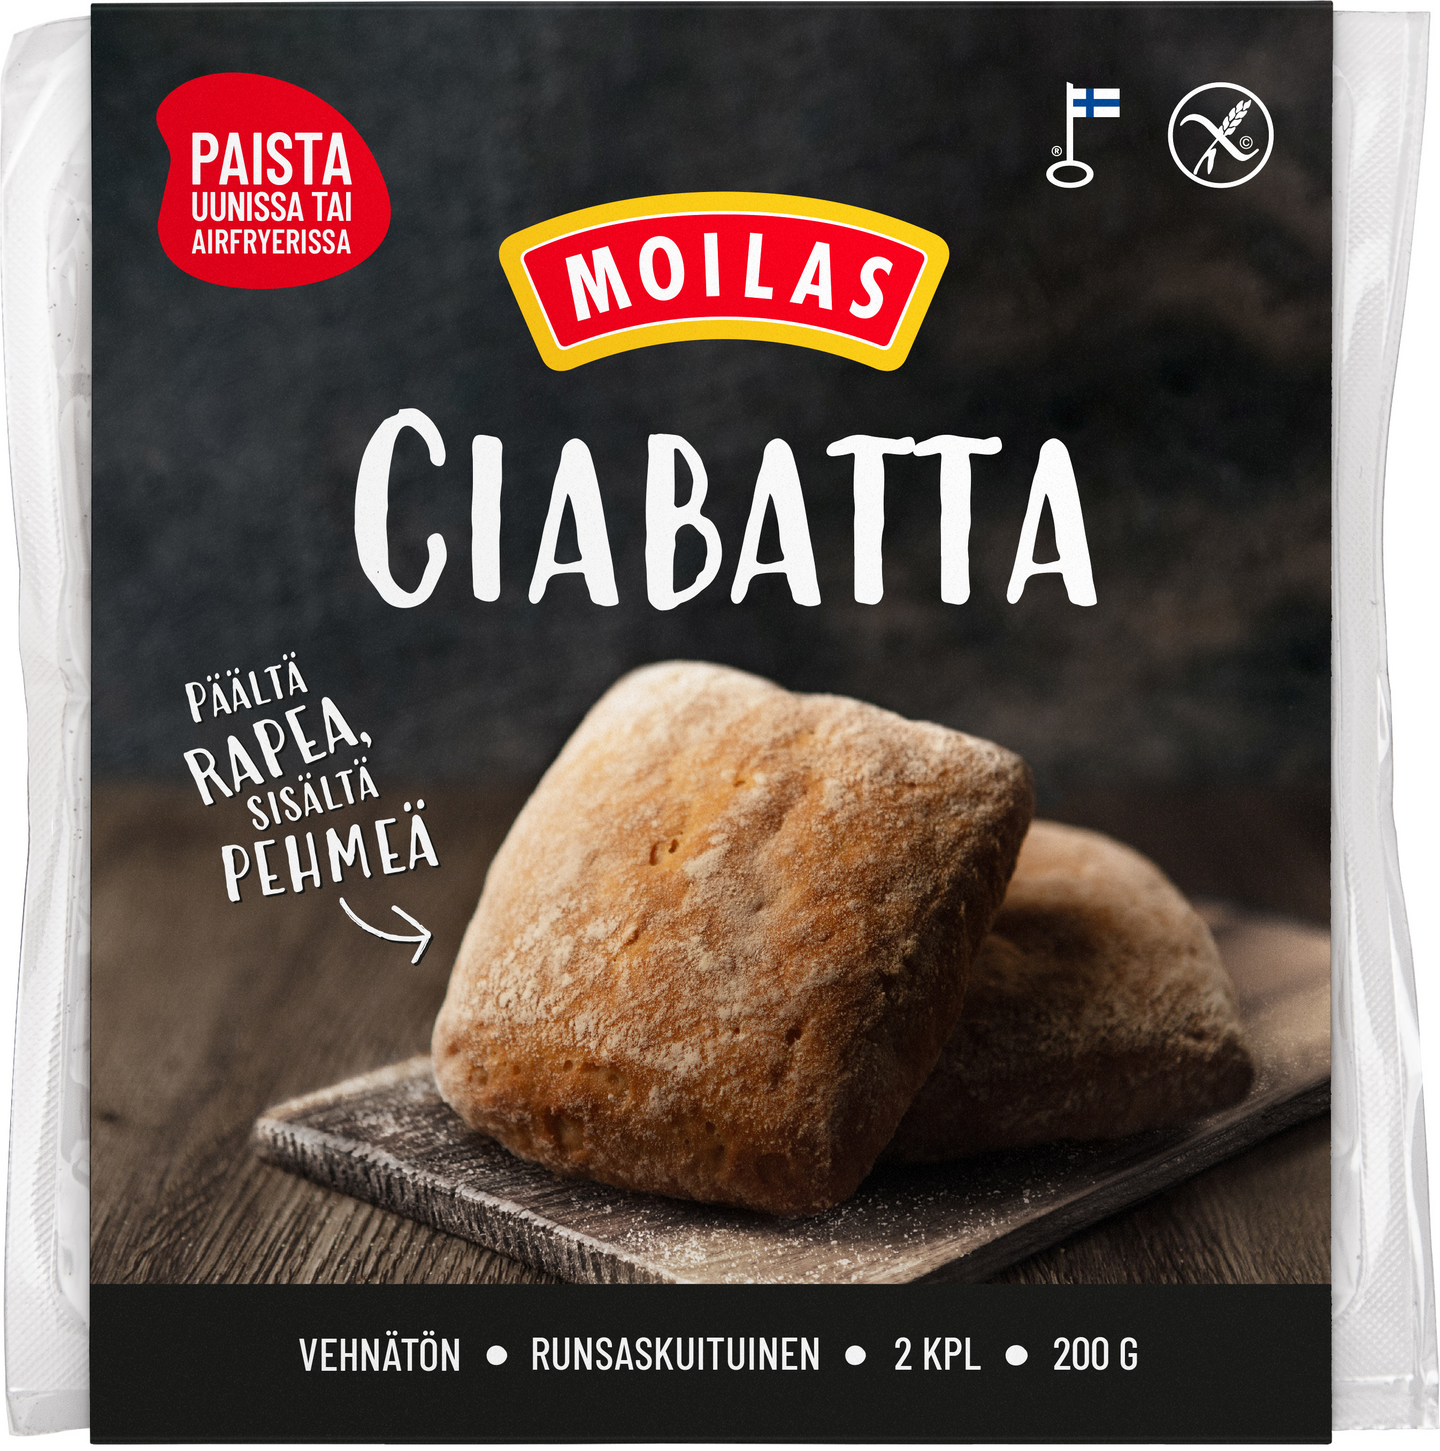 Moilas Ciabatta gluteeniton 2kpl/200g